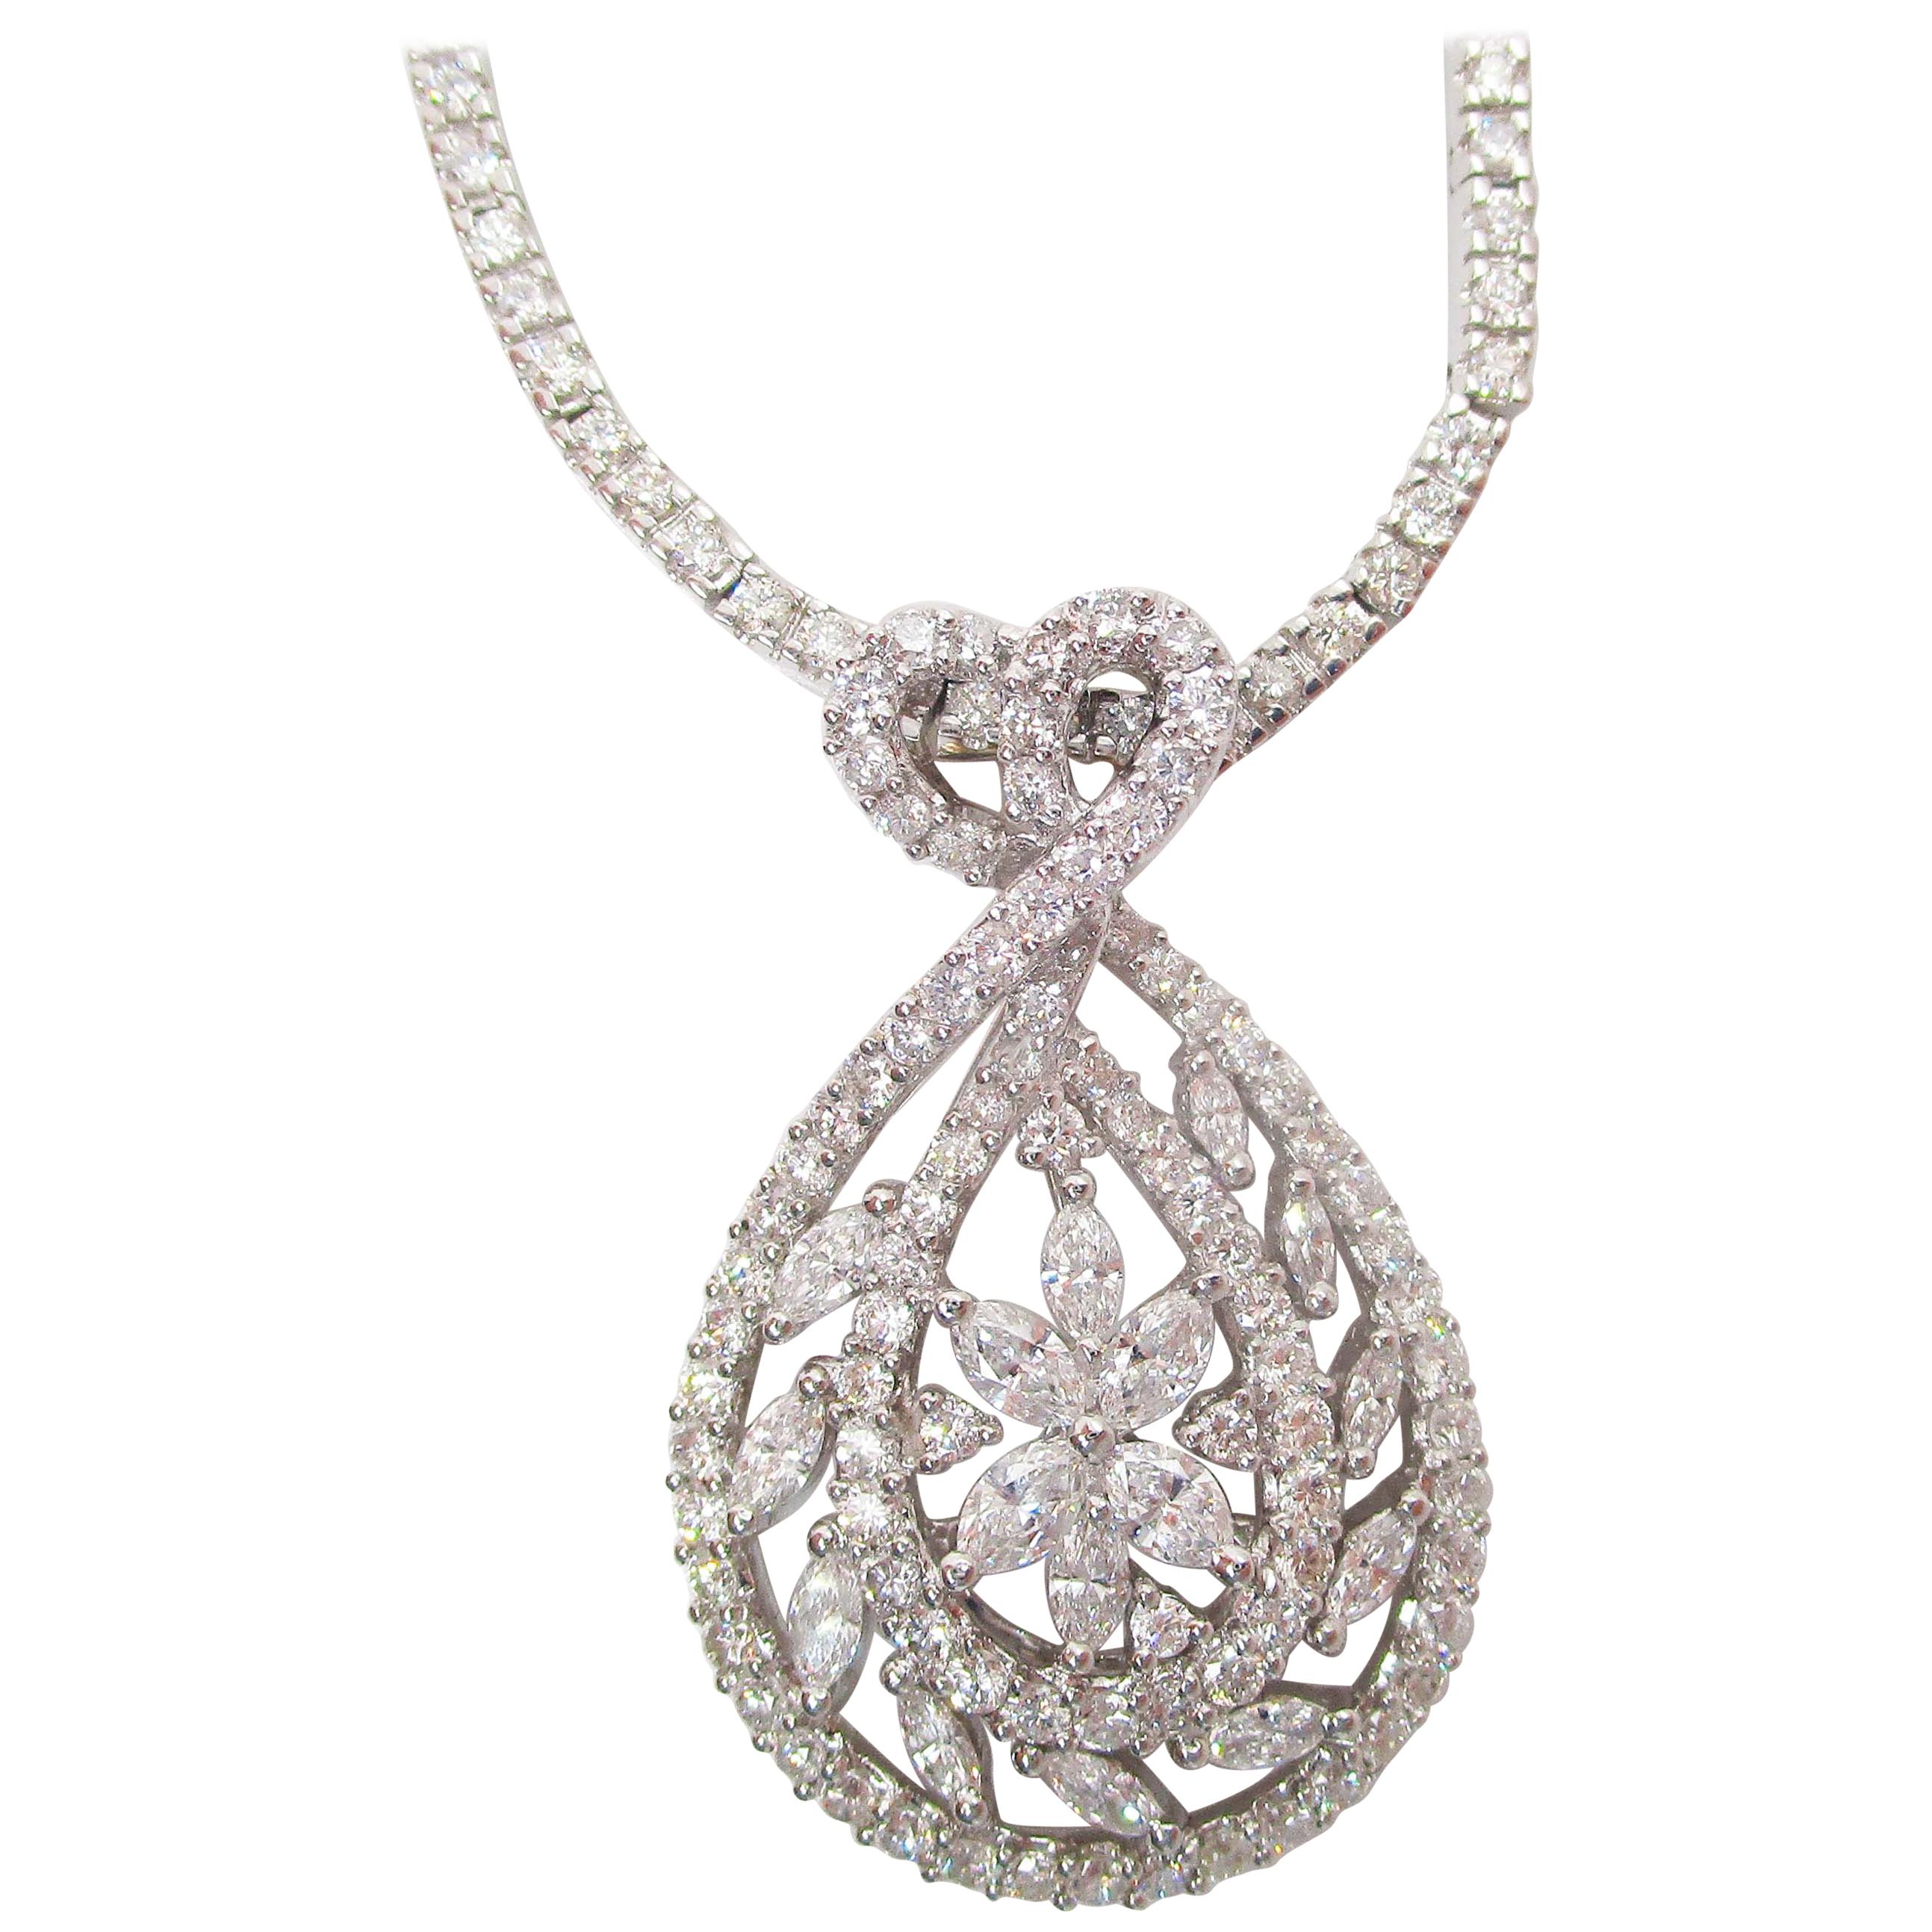 18 Karat Gold Diamond Necklace with Removable 18 Karat Diamond Teardrop Pendant